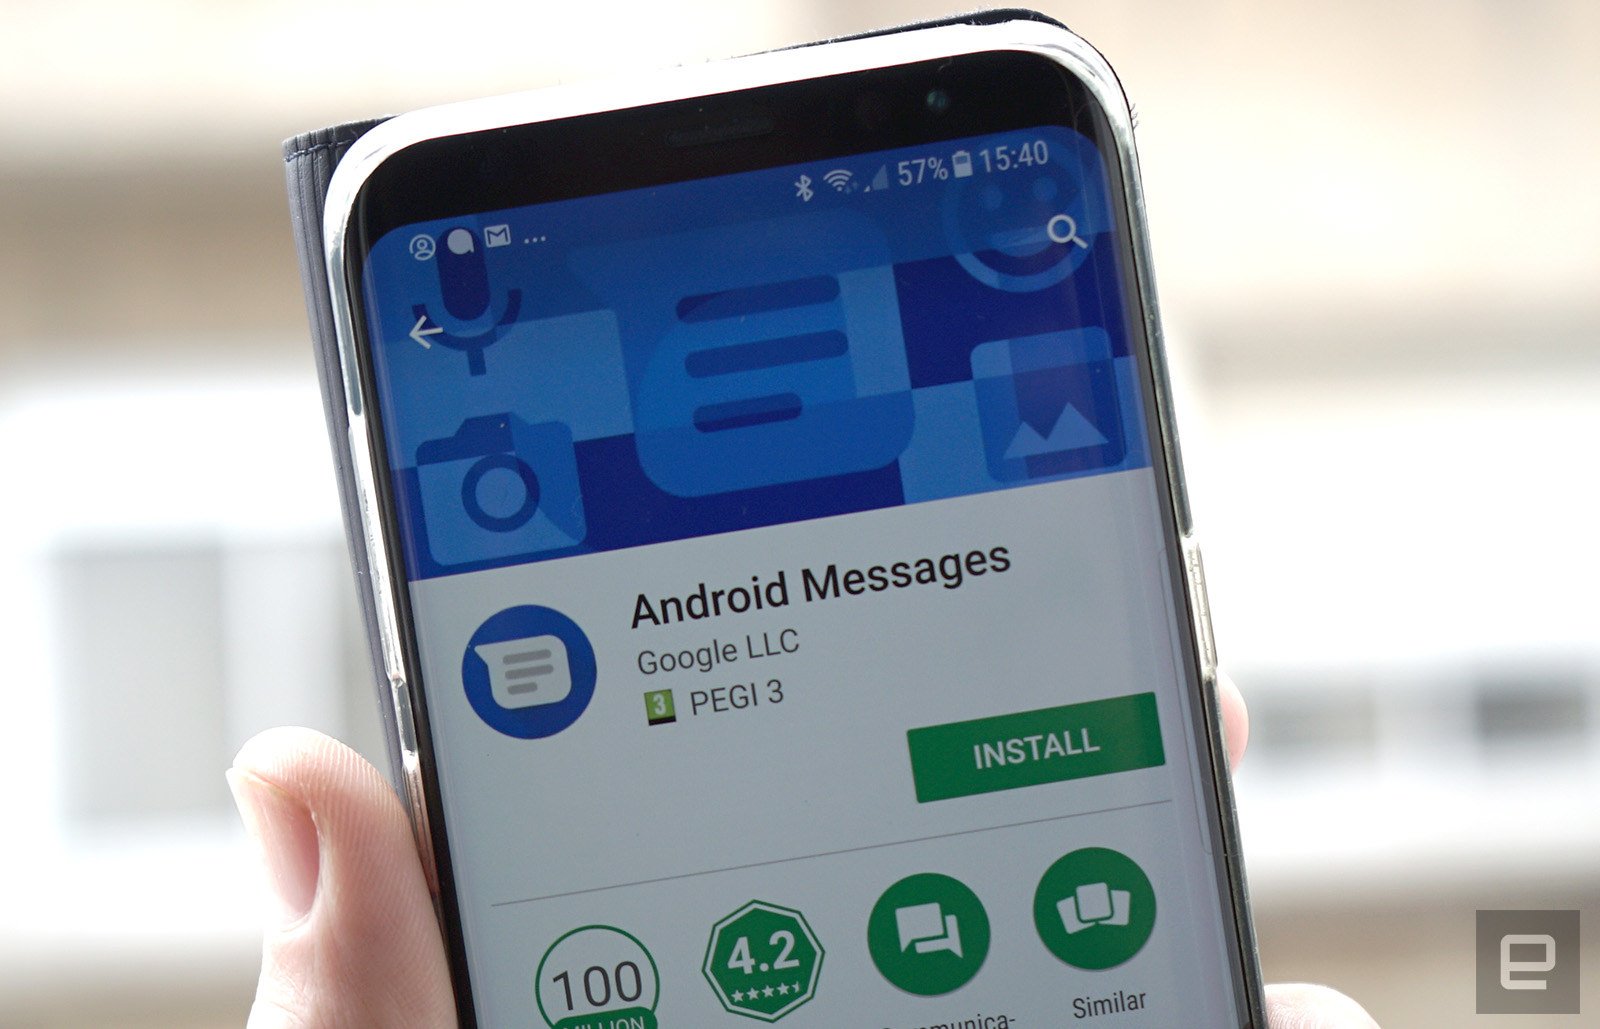 Установить messages. Google messages app. Message Android. Месседж гугл ком. Android messages old.